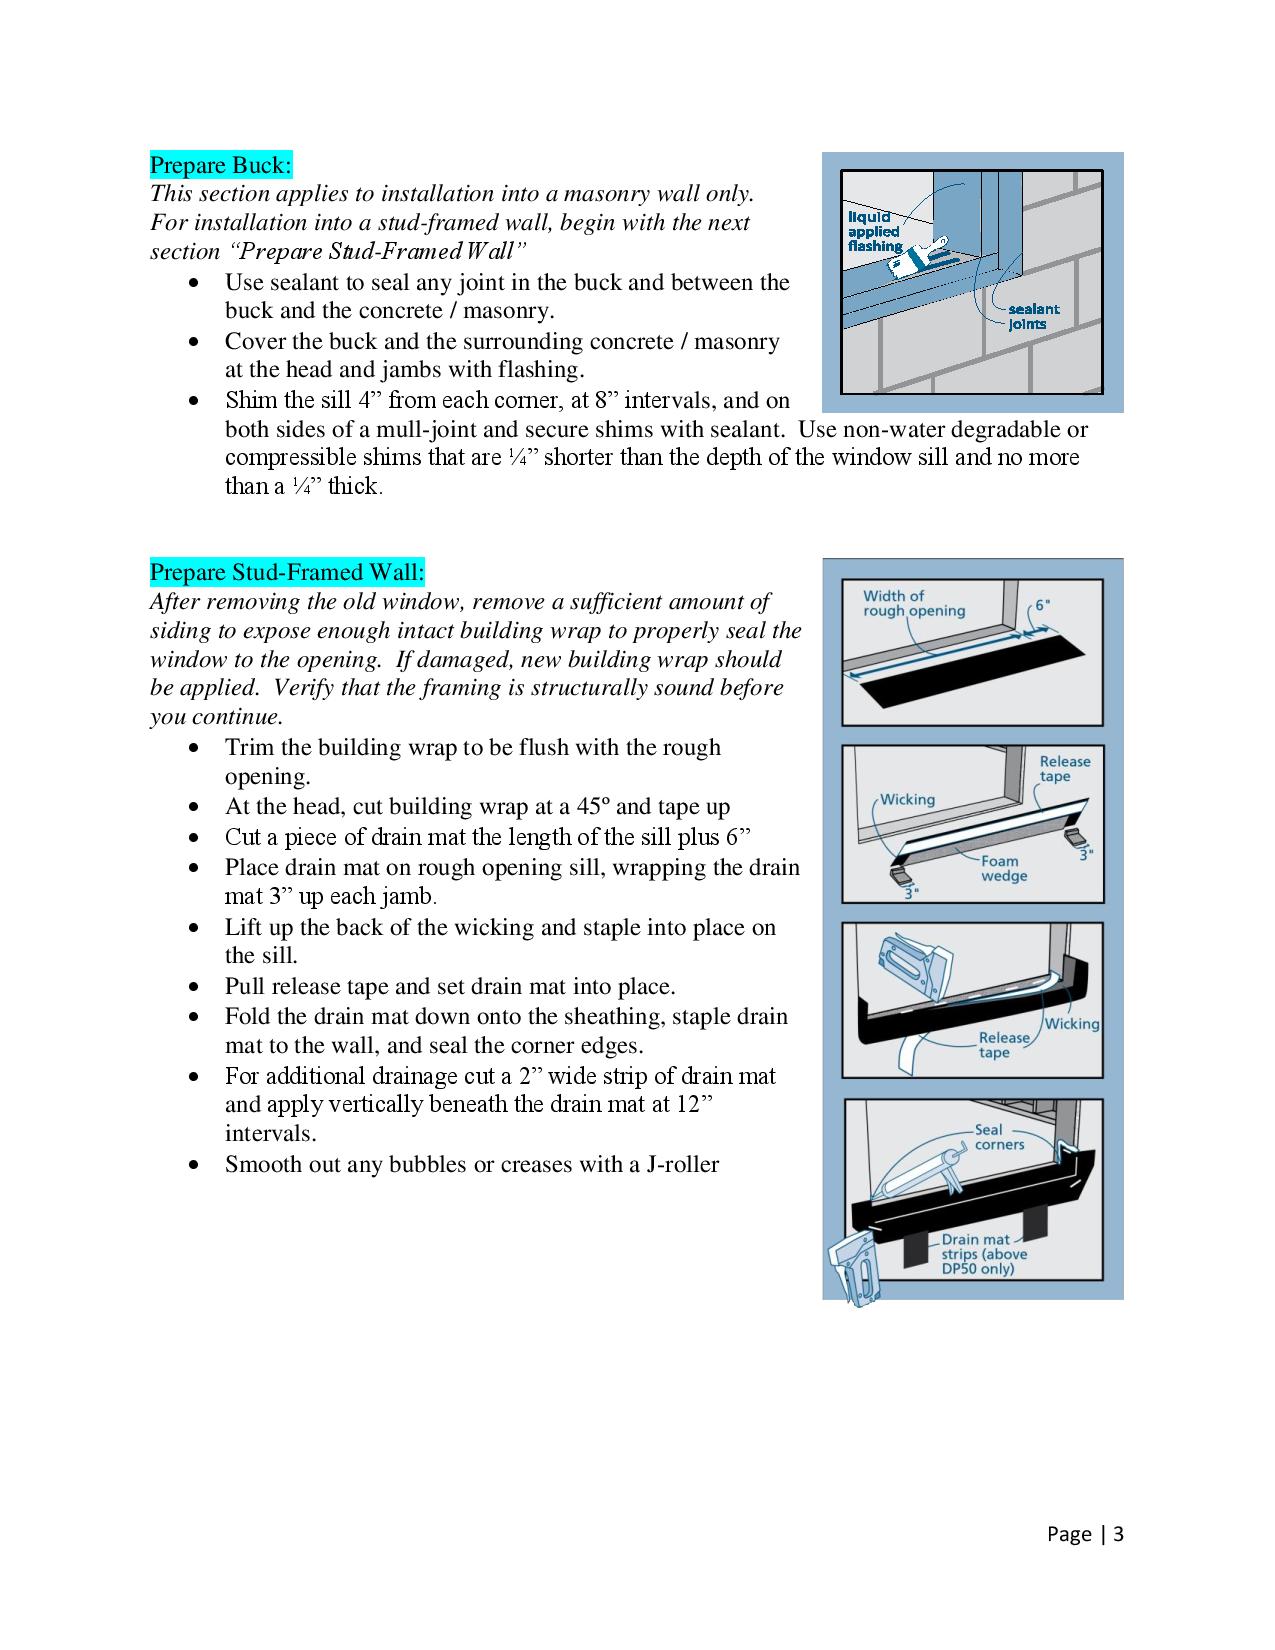 Glass-Rite’s Guide to Nail-Fin Window Installation - Glass Rite